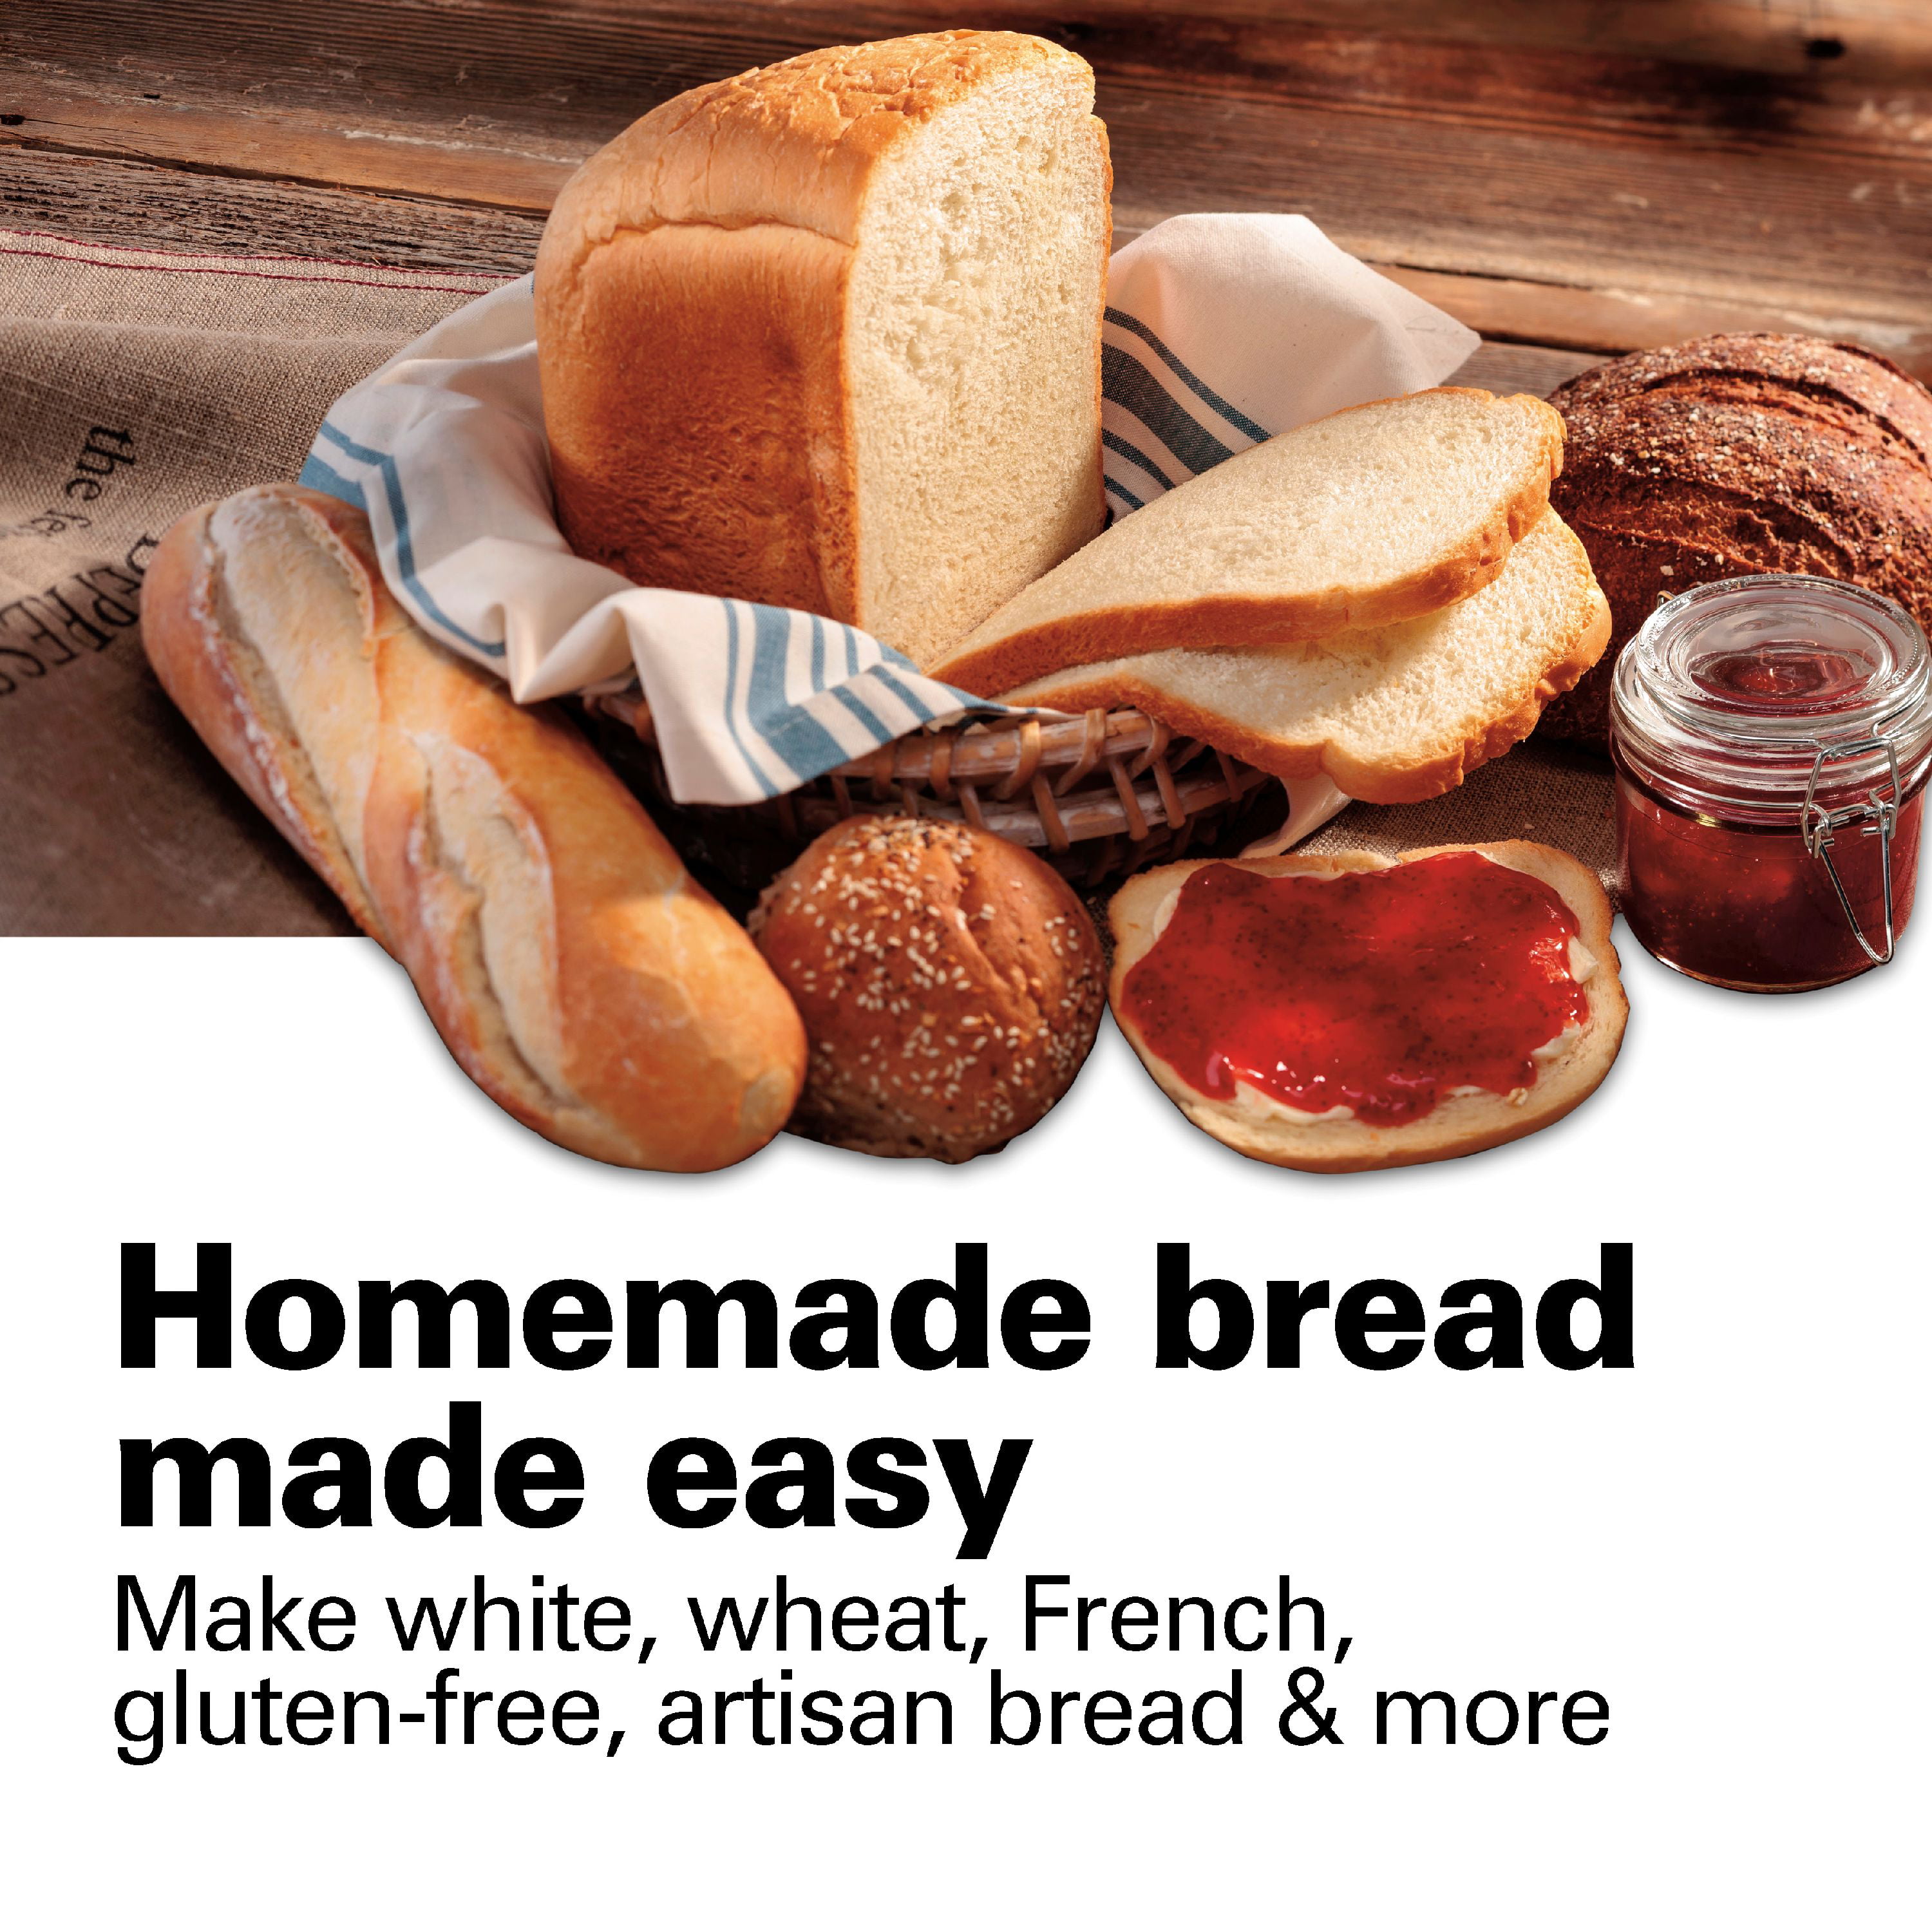 Grab a Hamilton Beach bread maker for just $49 at Walmart